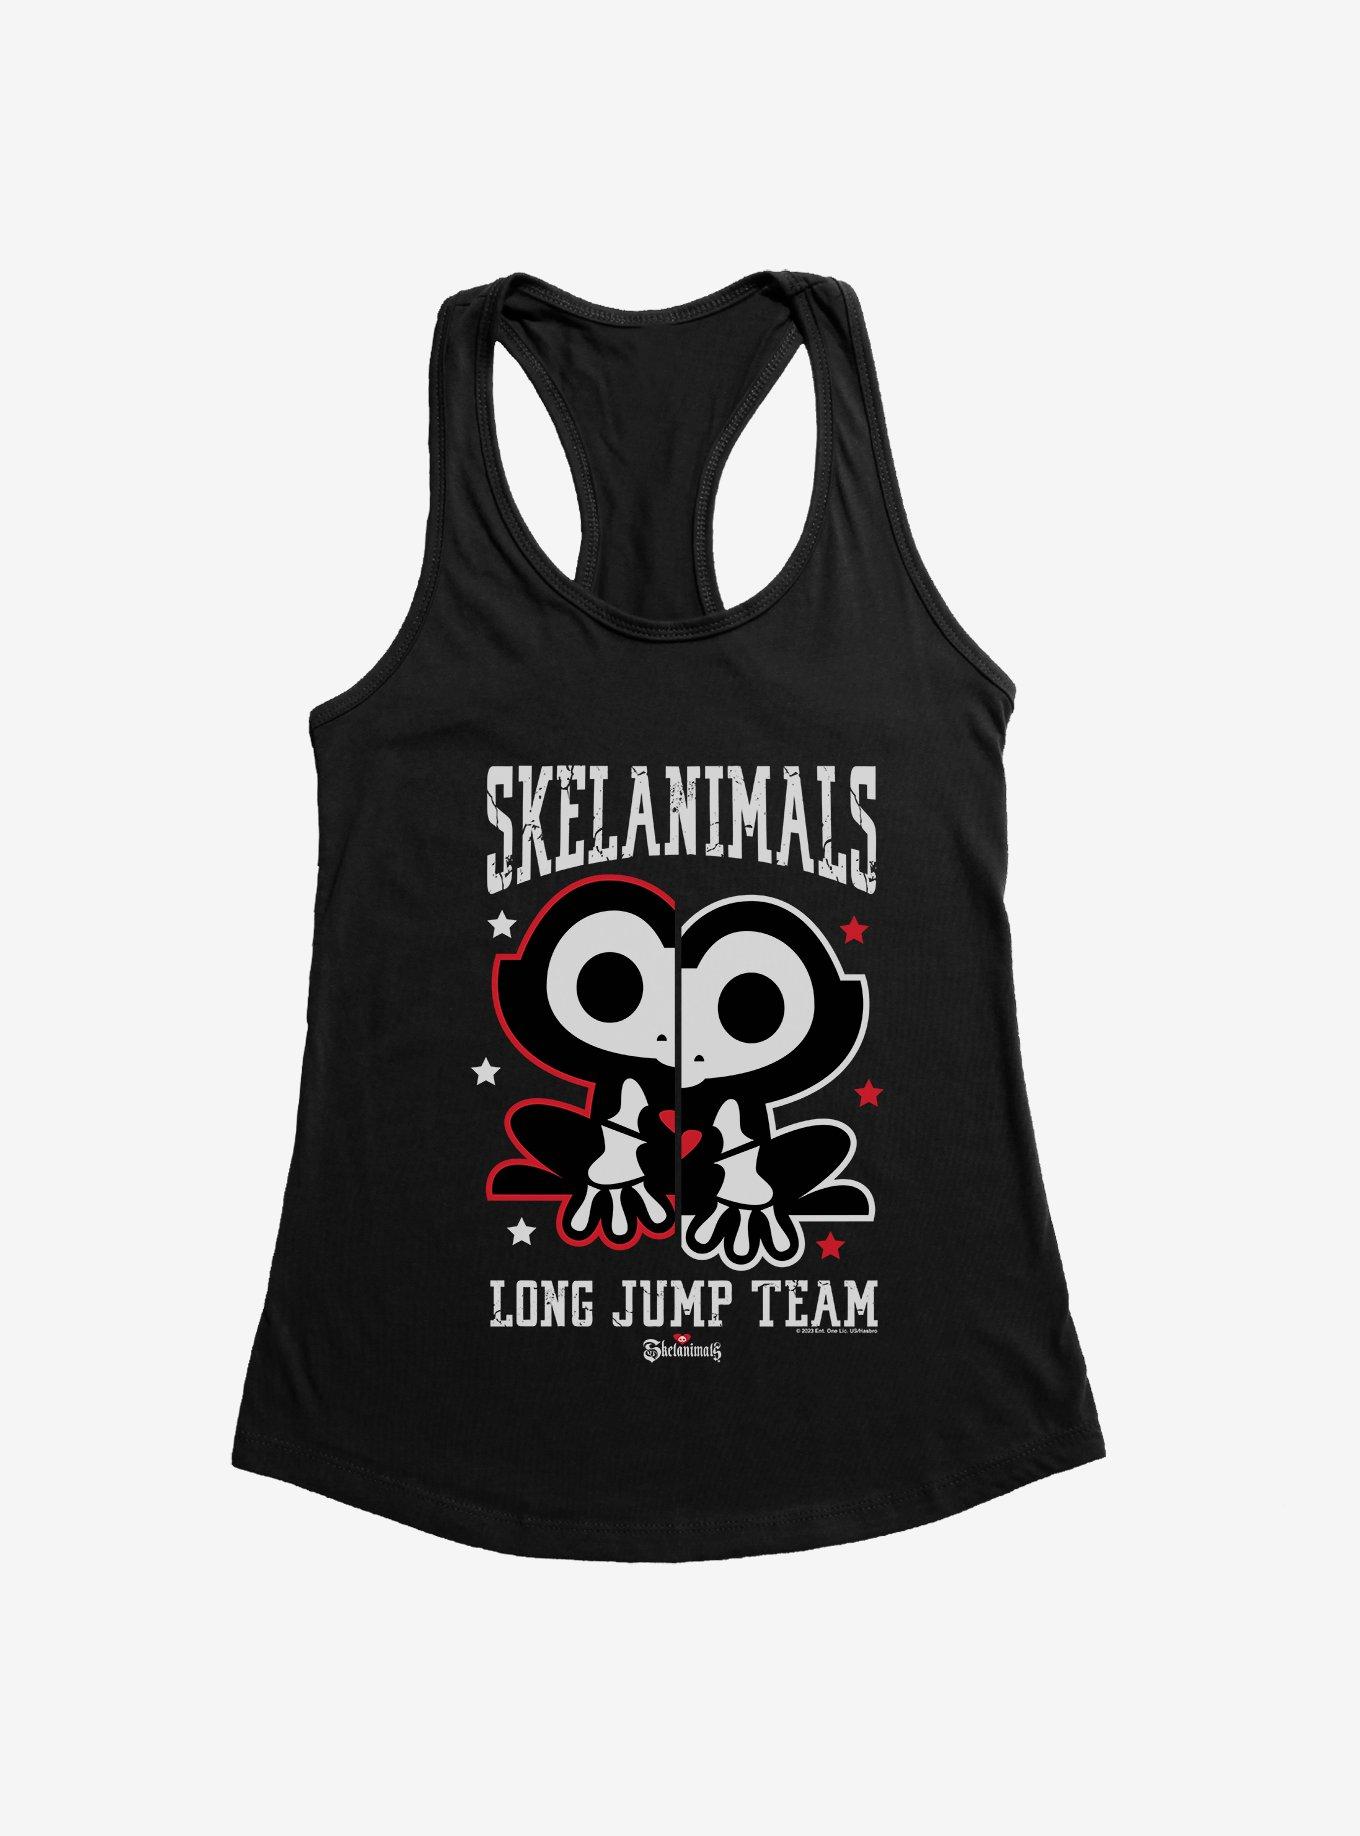 Skelanimals Chip Long Jump Team Girls Tank, BLACK, hi-res